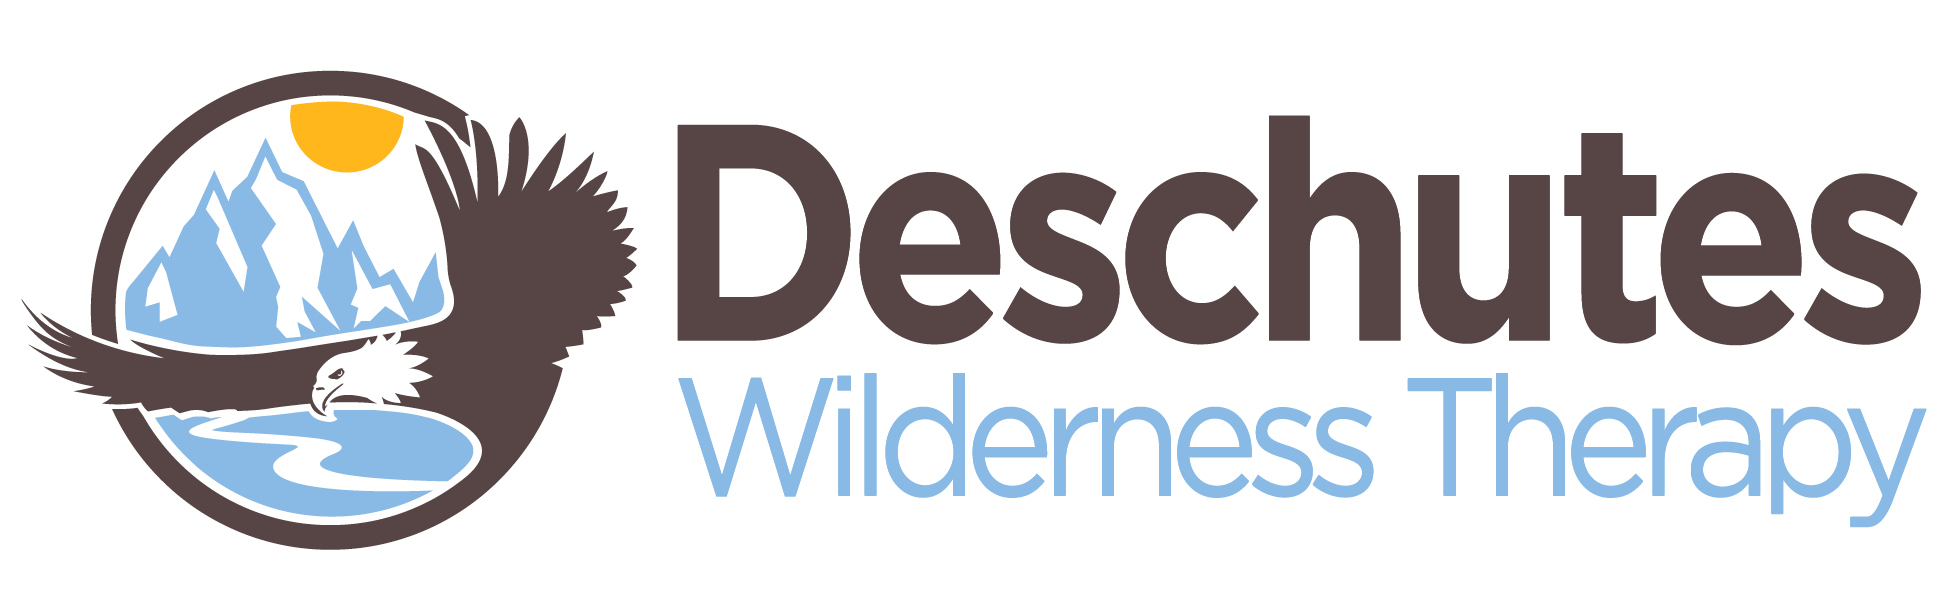 Deschutes Wilderness Therapy logo